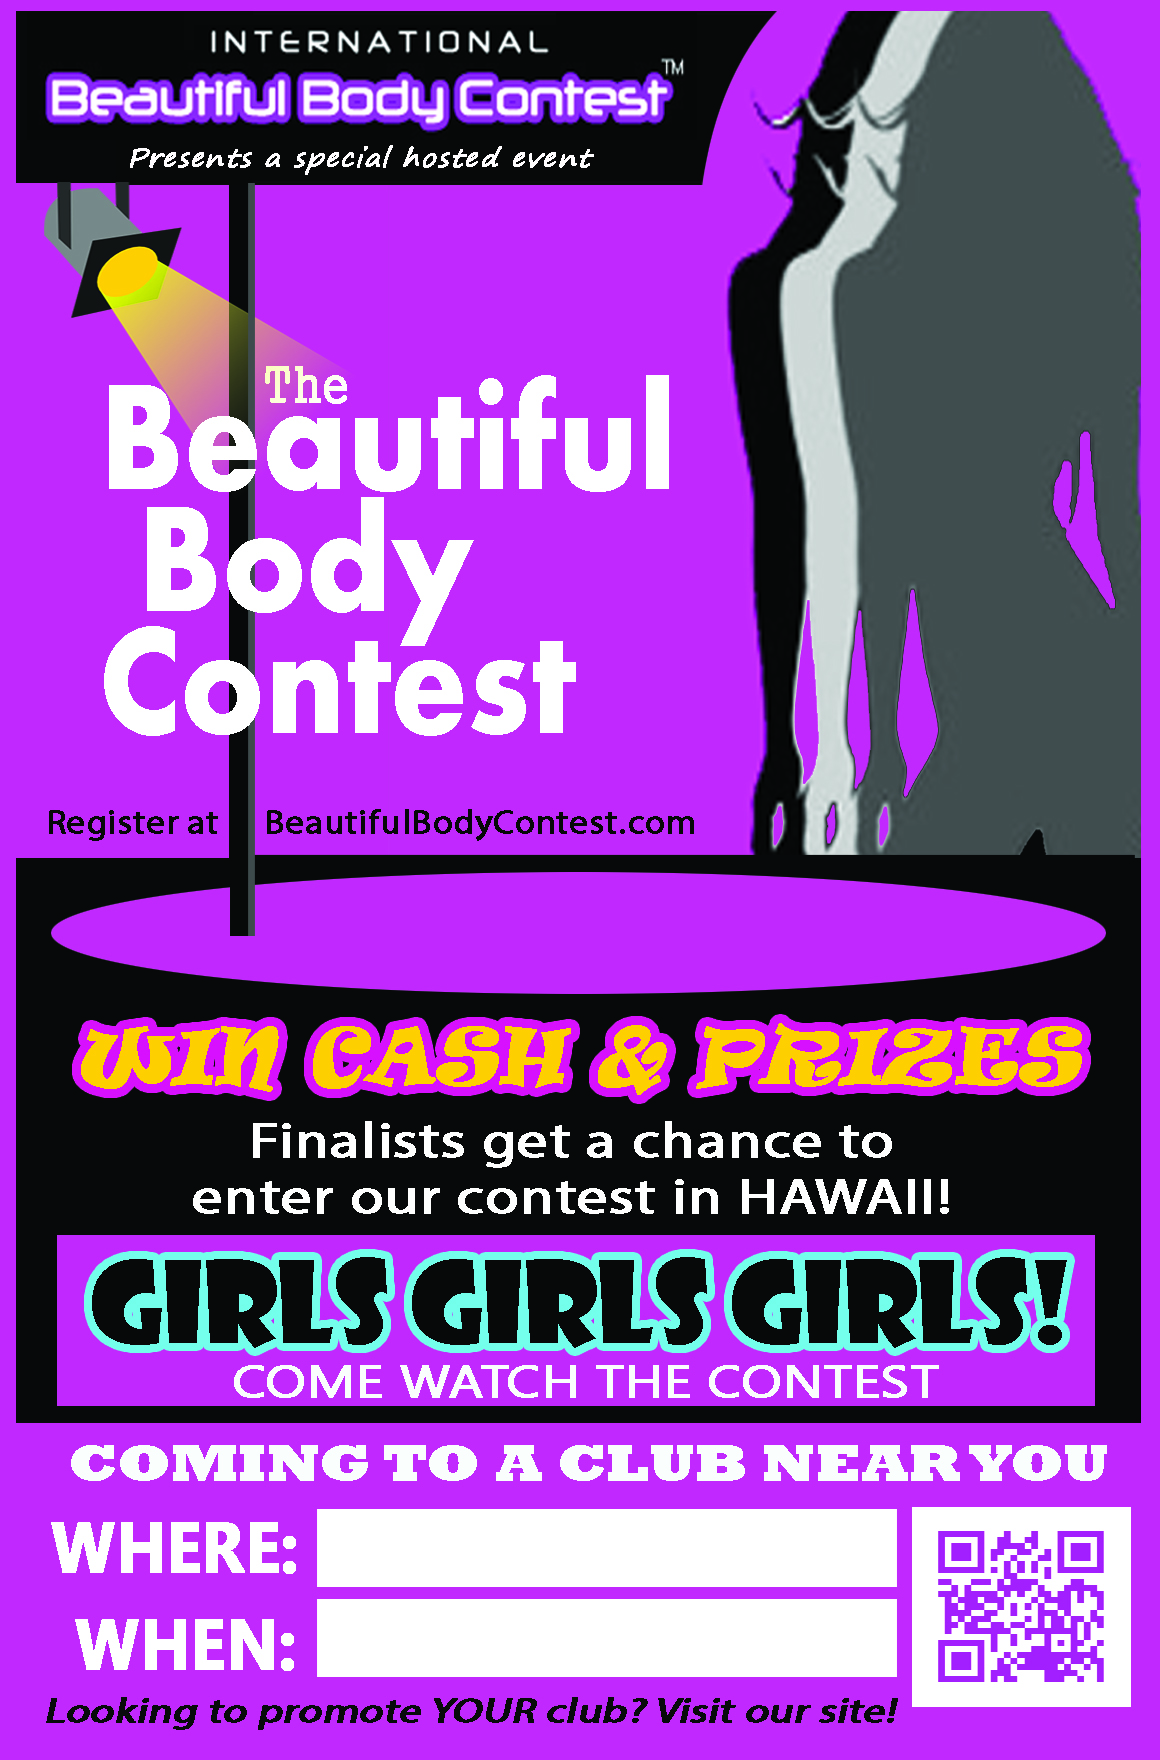 Beautiful Body Contest - International